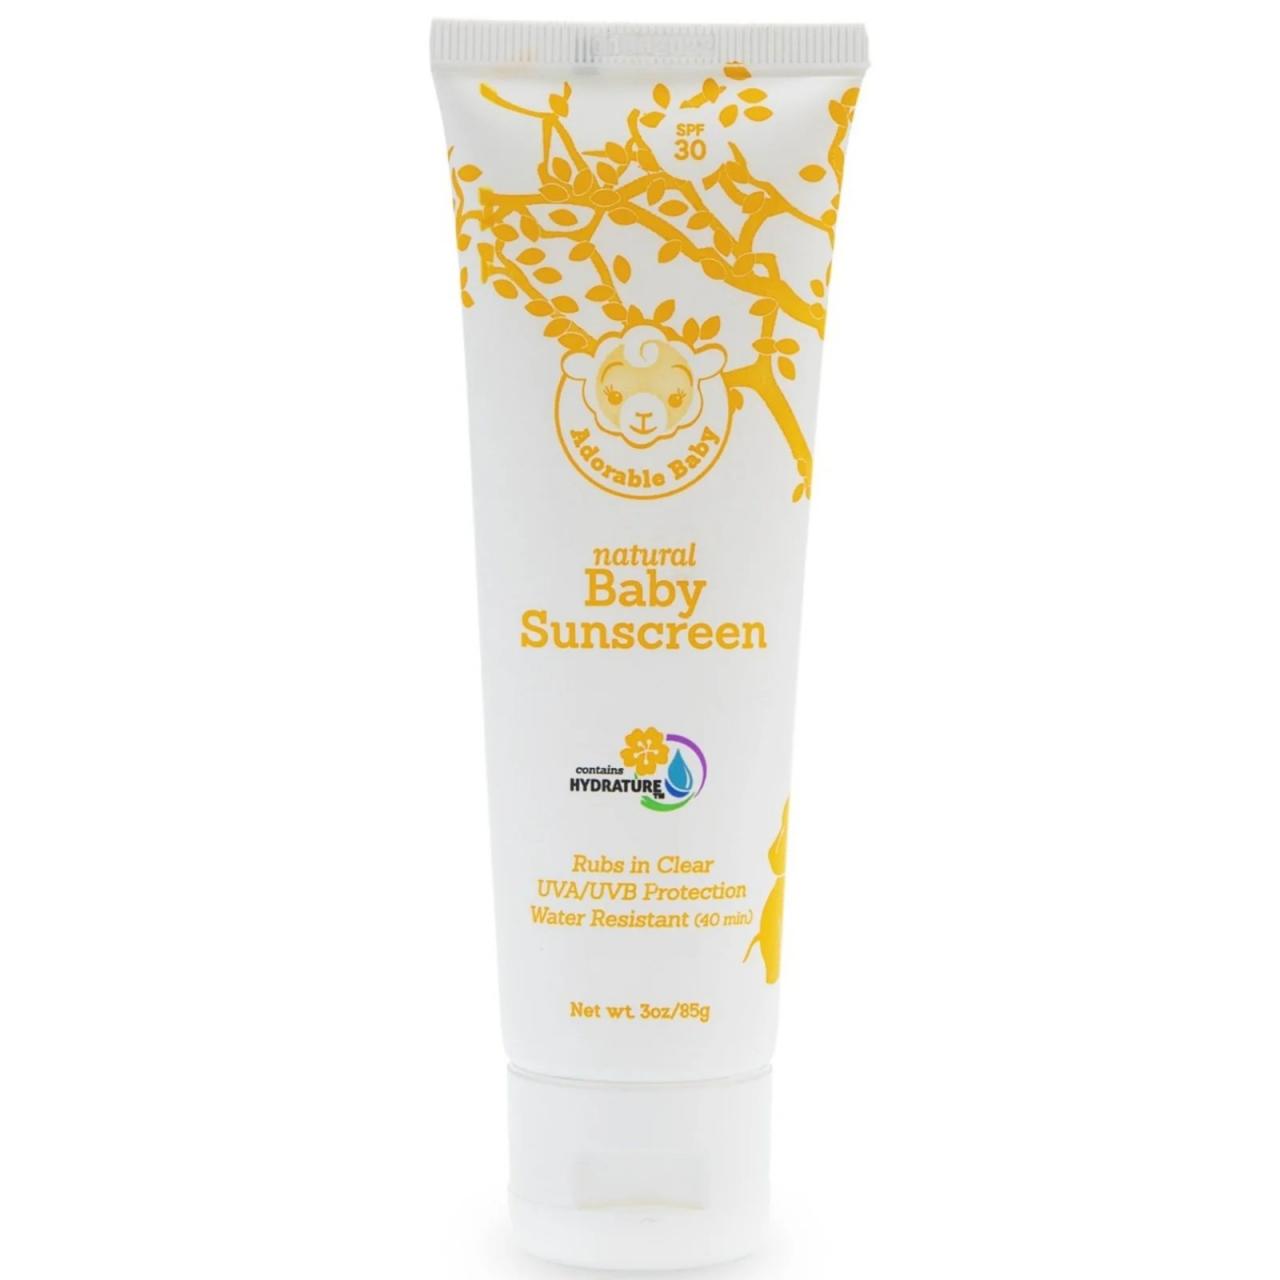 Physical Sunscreen Bayi, Perlindungan Aman untuk Kulit Sensitif